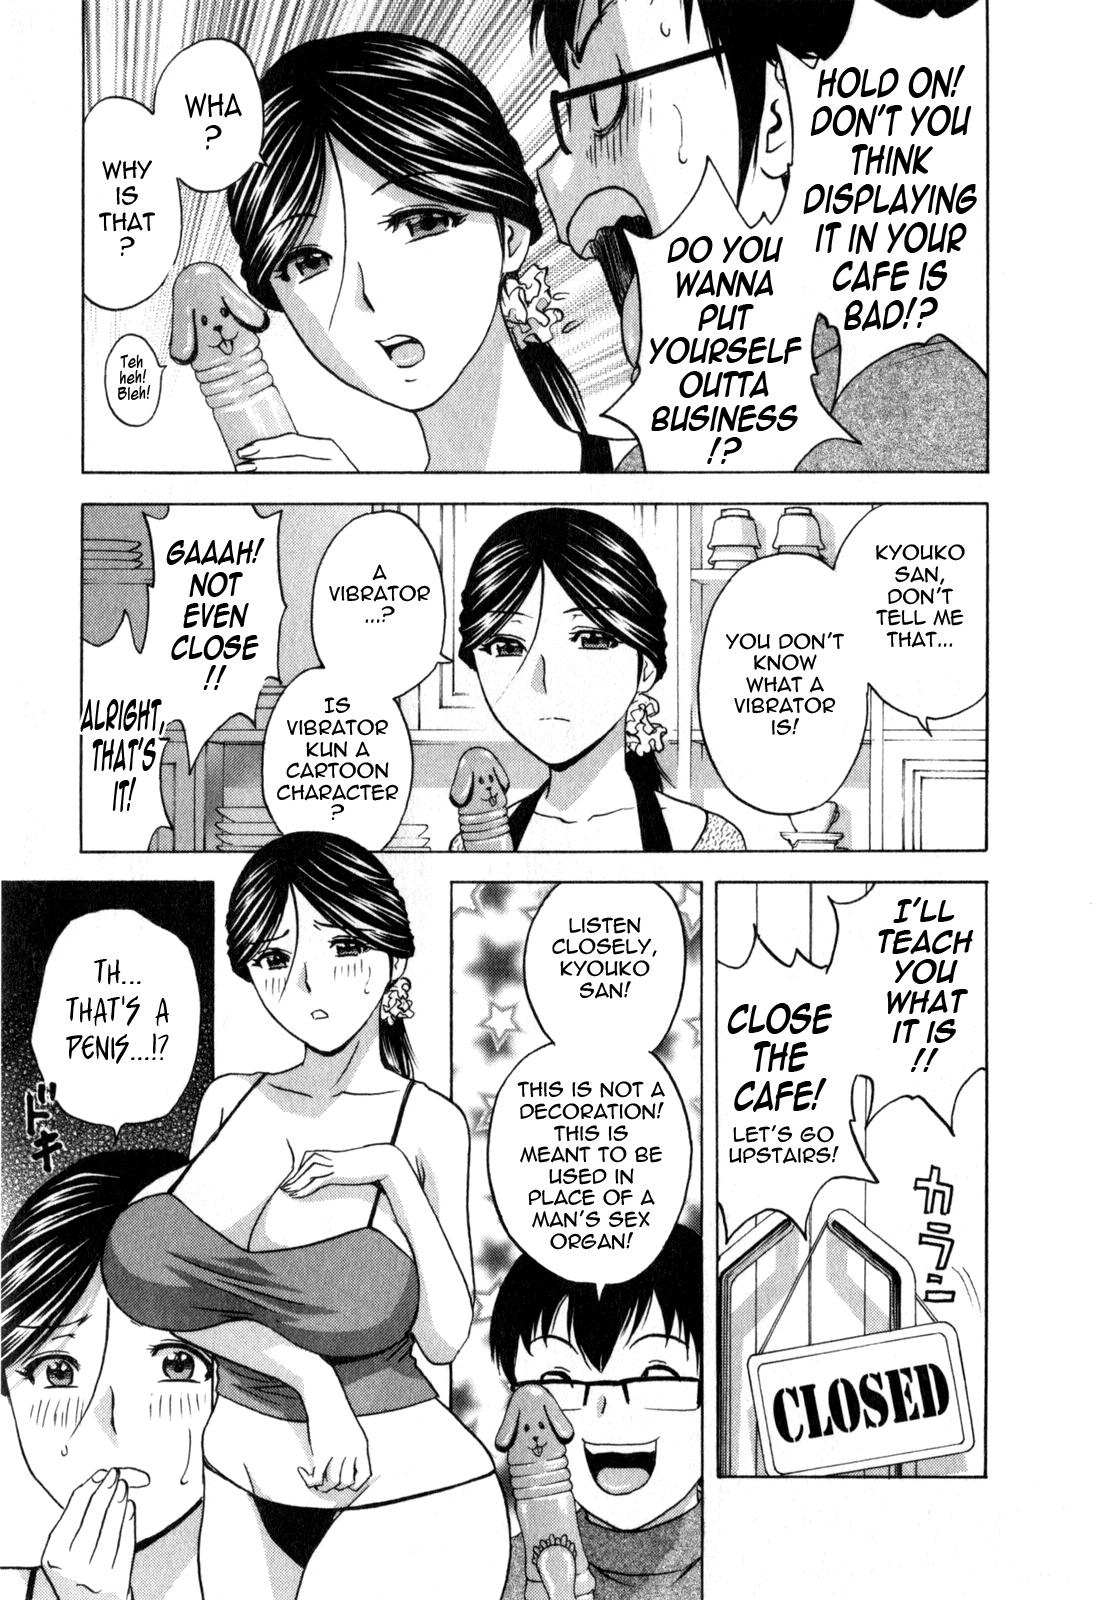 [Hidemaru] Life with Married Women Just Like a Manga 3 - Ch. 1-5 [English] {Tadanohito} 16